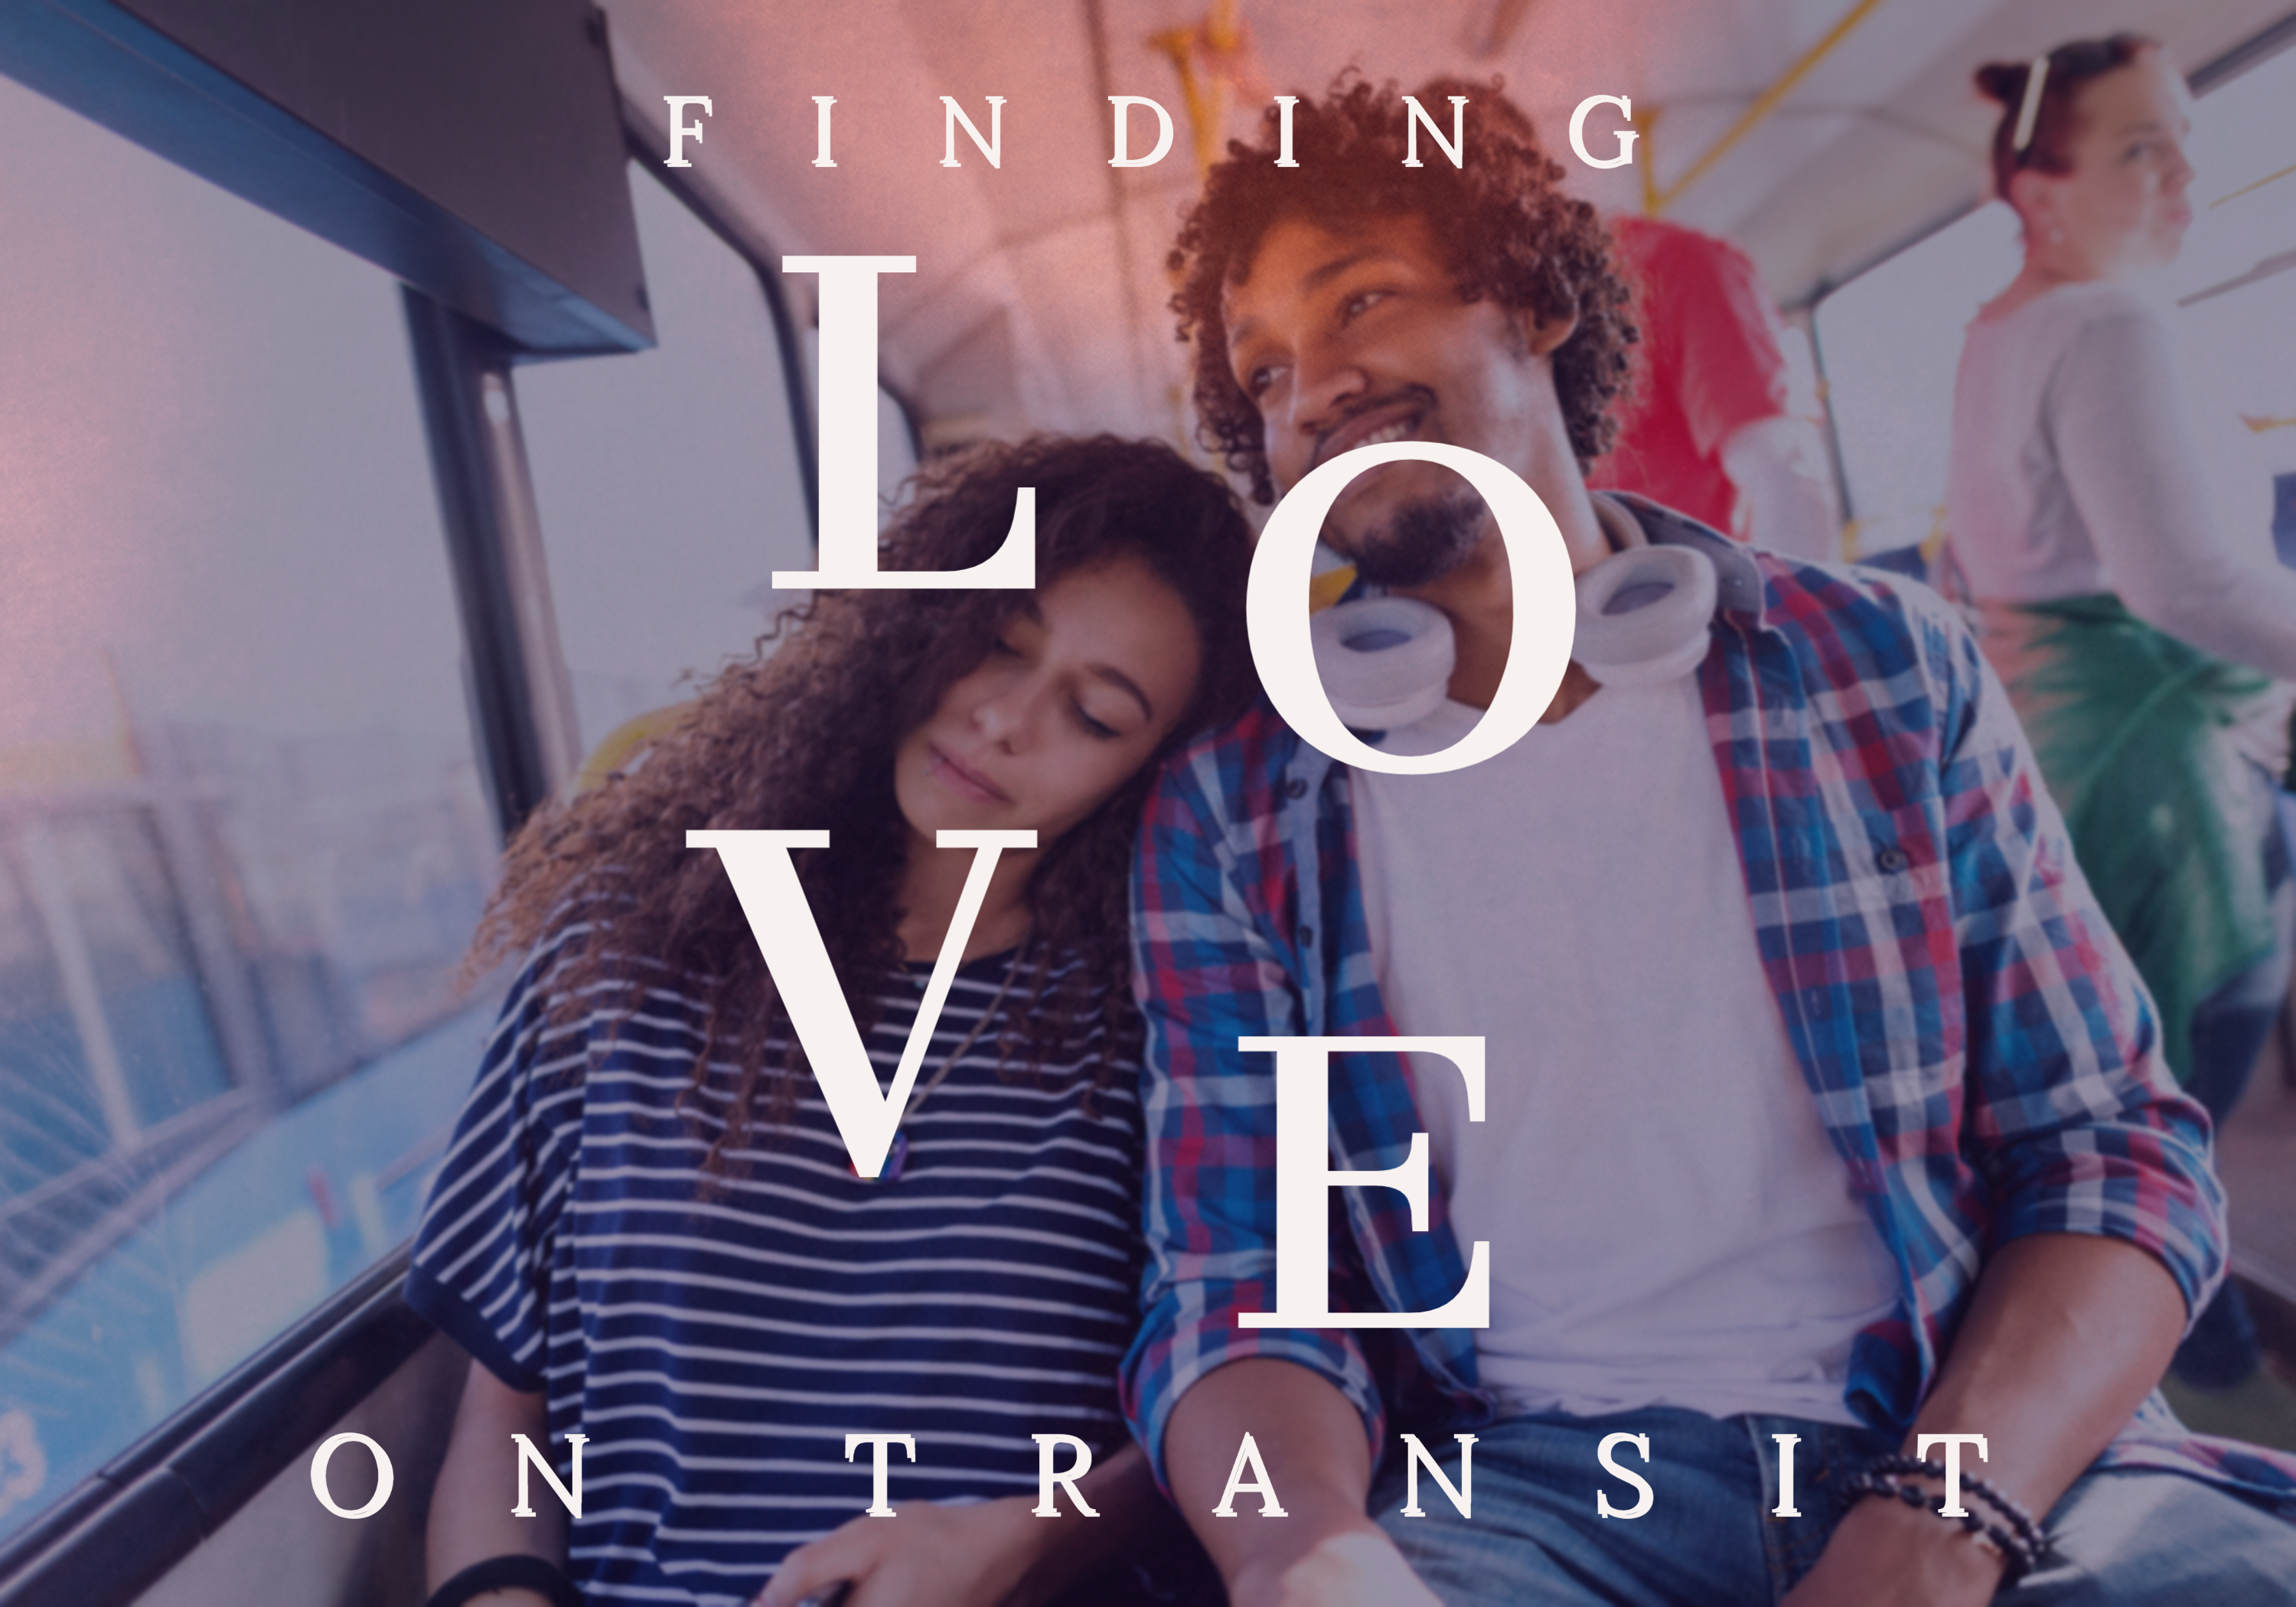 Three Transit Love Stories to Brighten Your Day